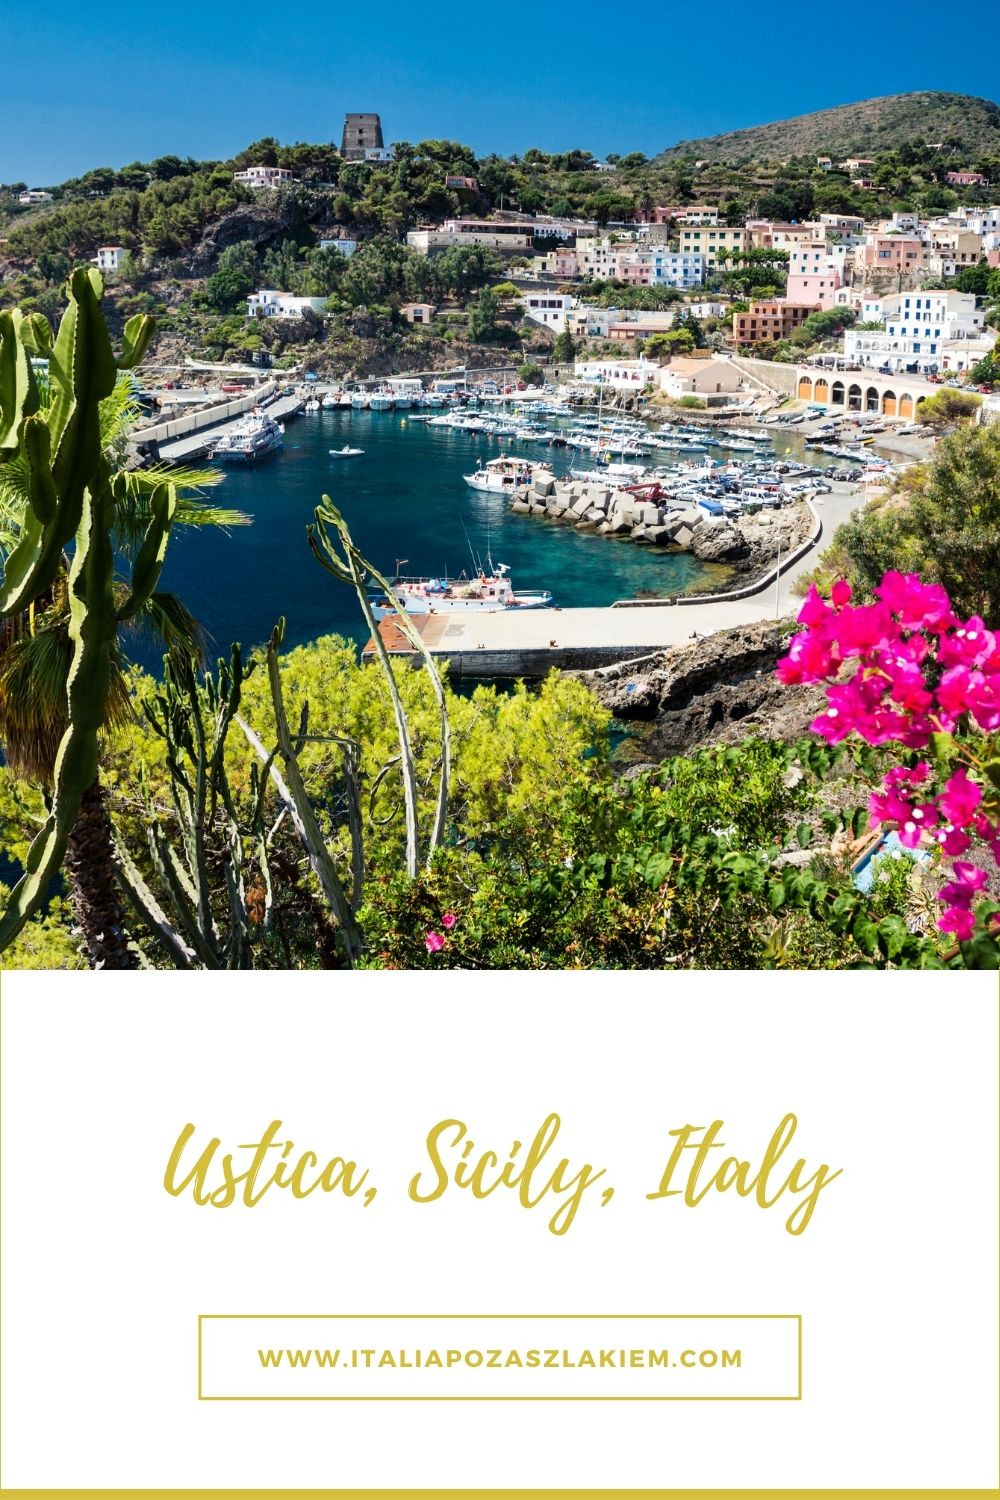 Ustica, Sicily, Italy